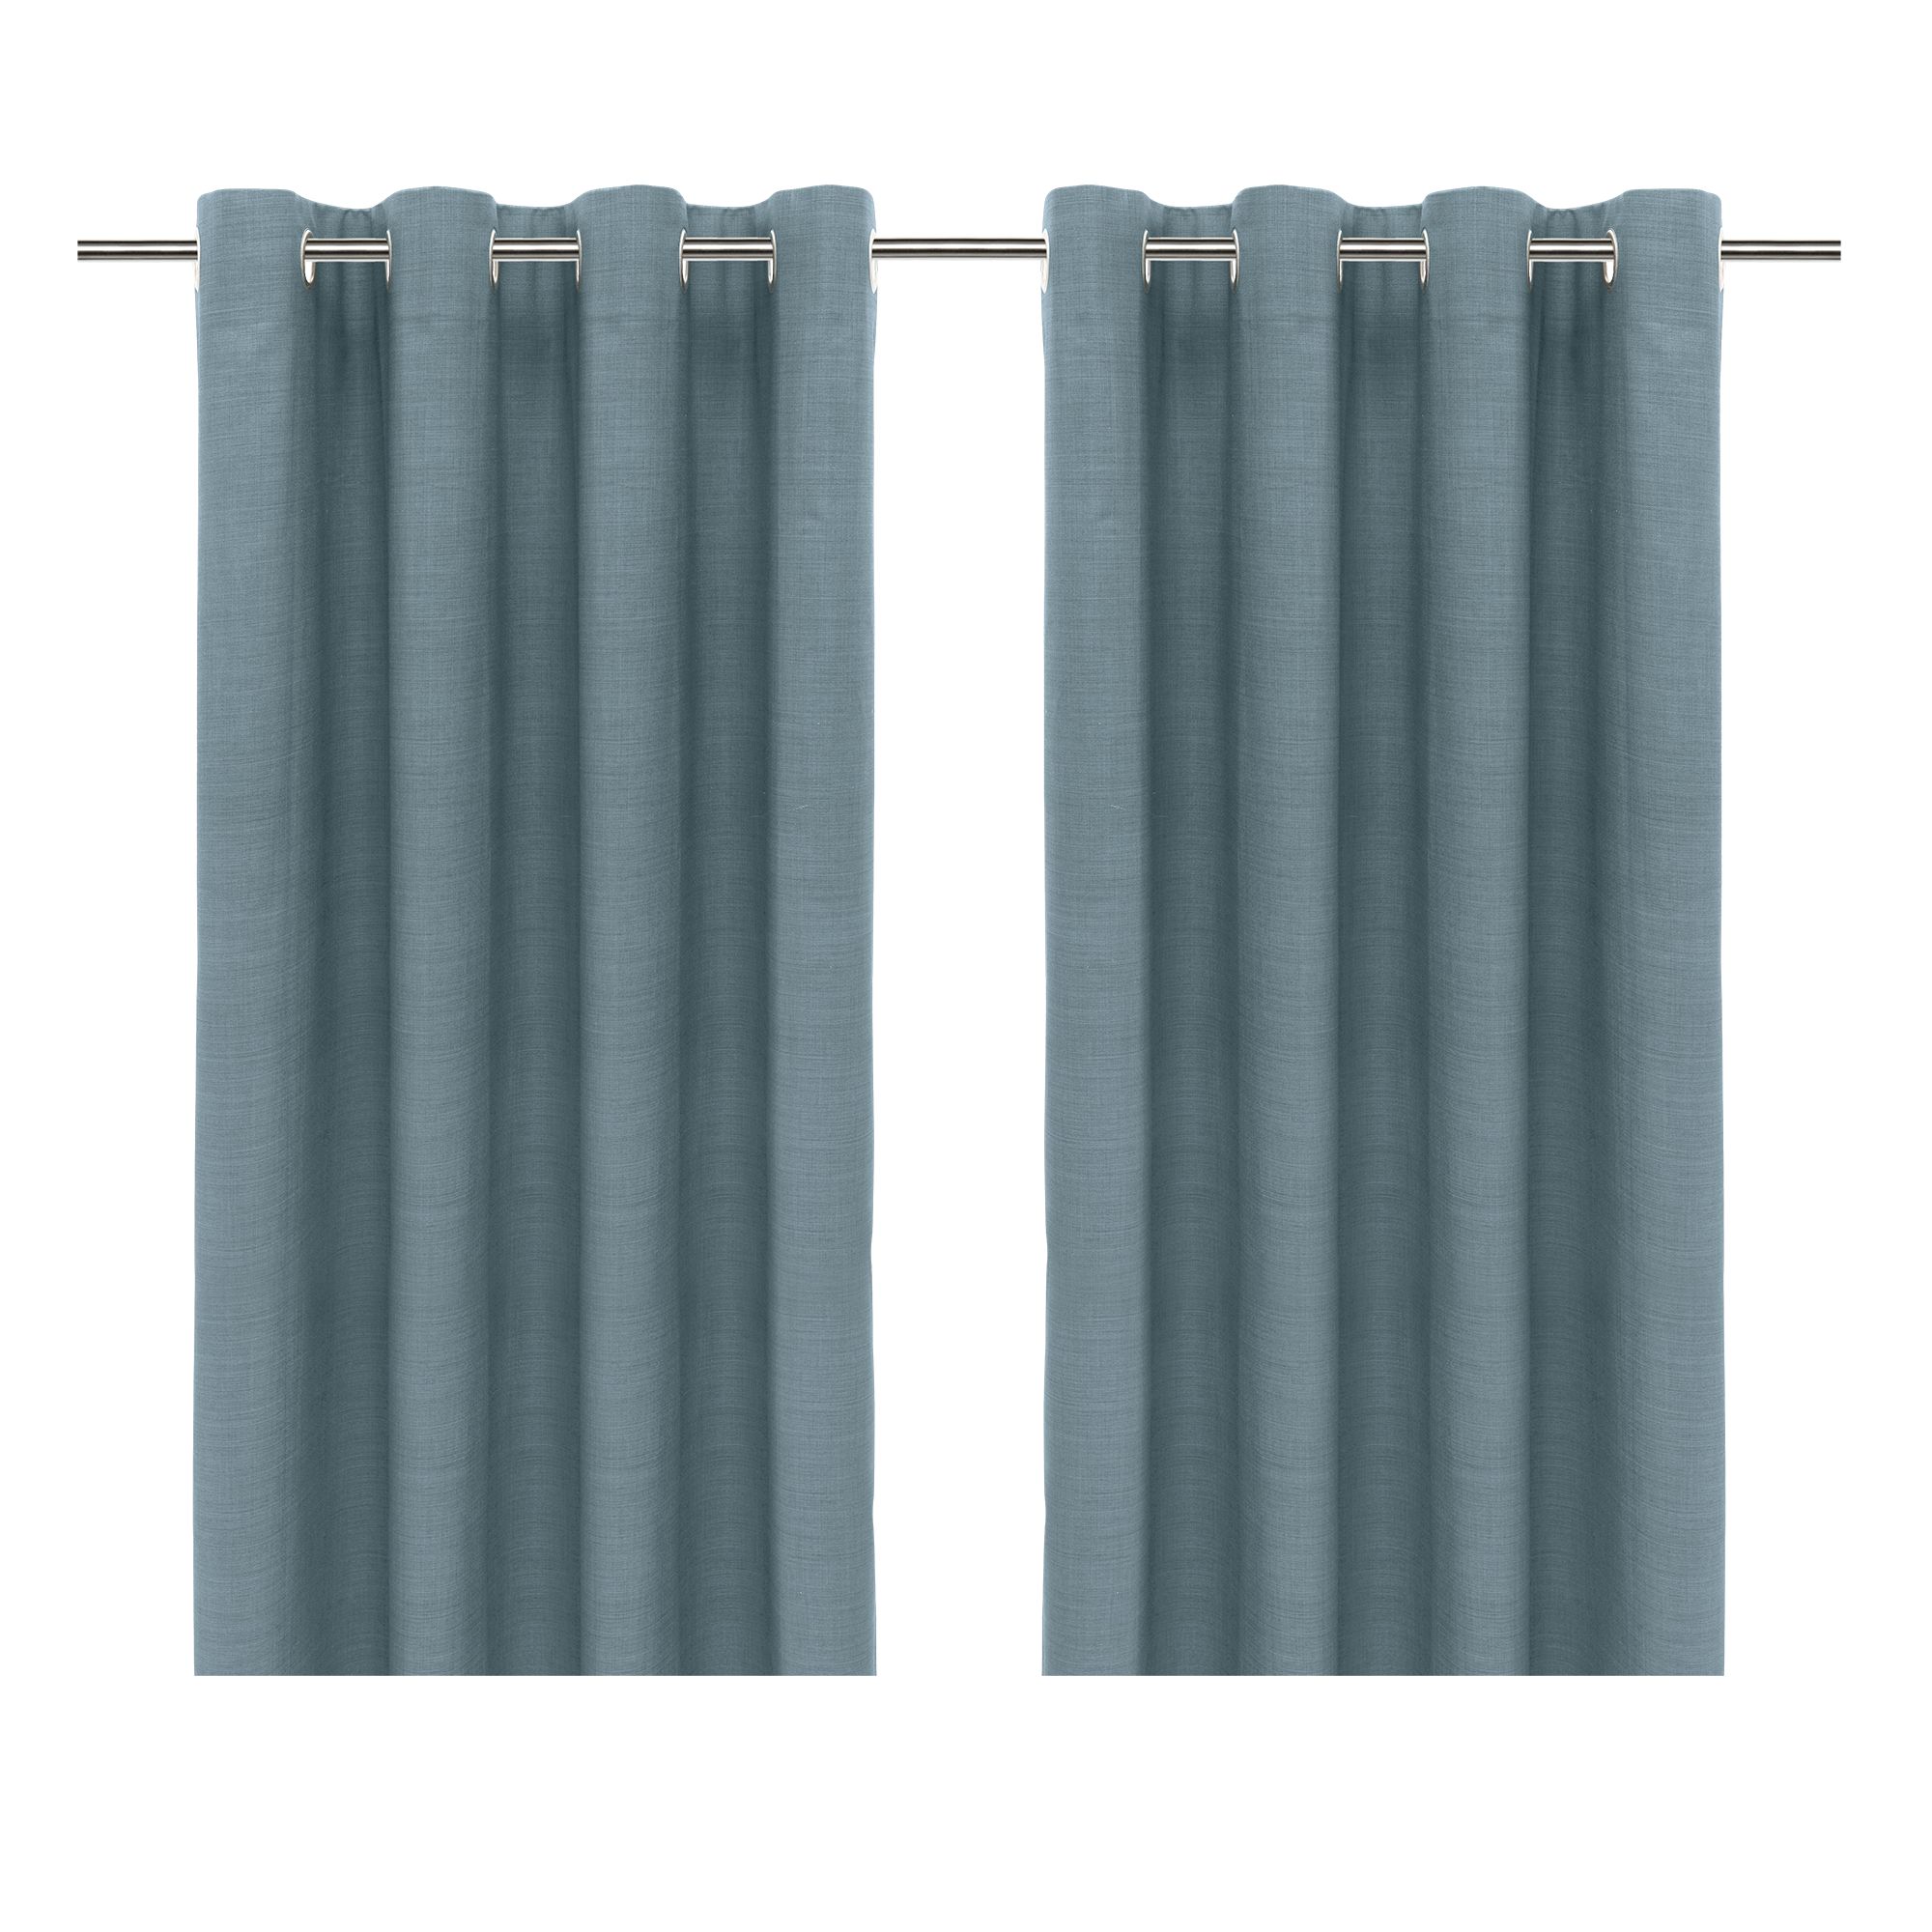 Glend Light blue Plain woven Blackout & thermal Eyelet Curtain (W)117cm (L)137cm, Pair